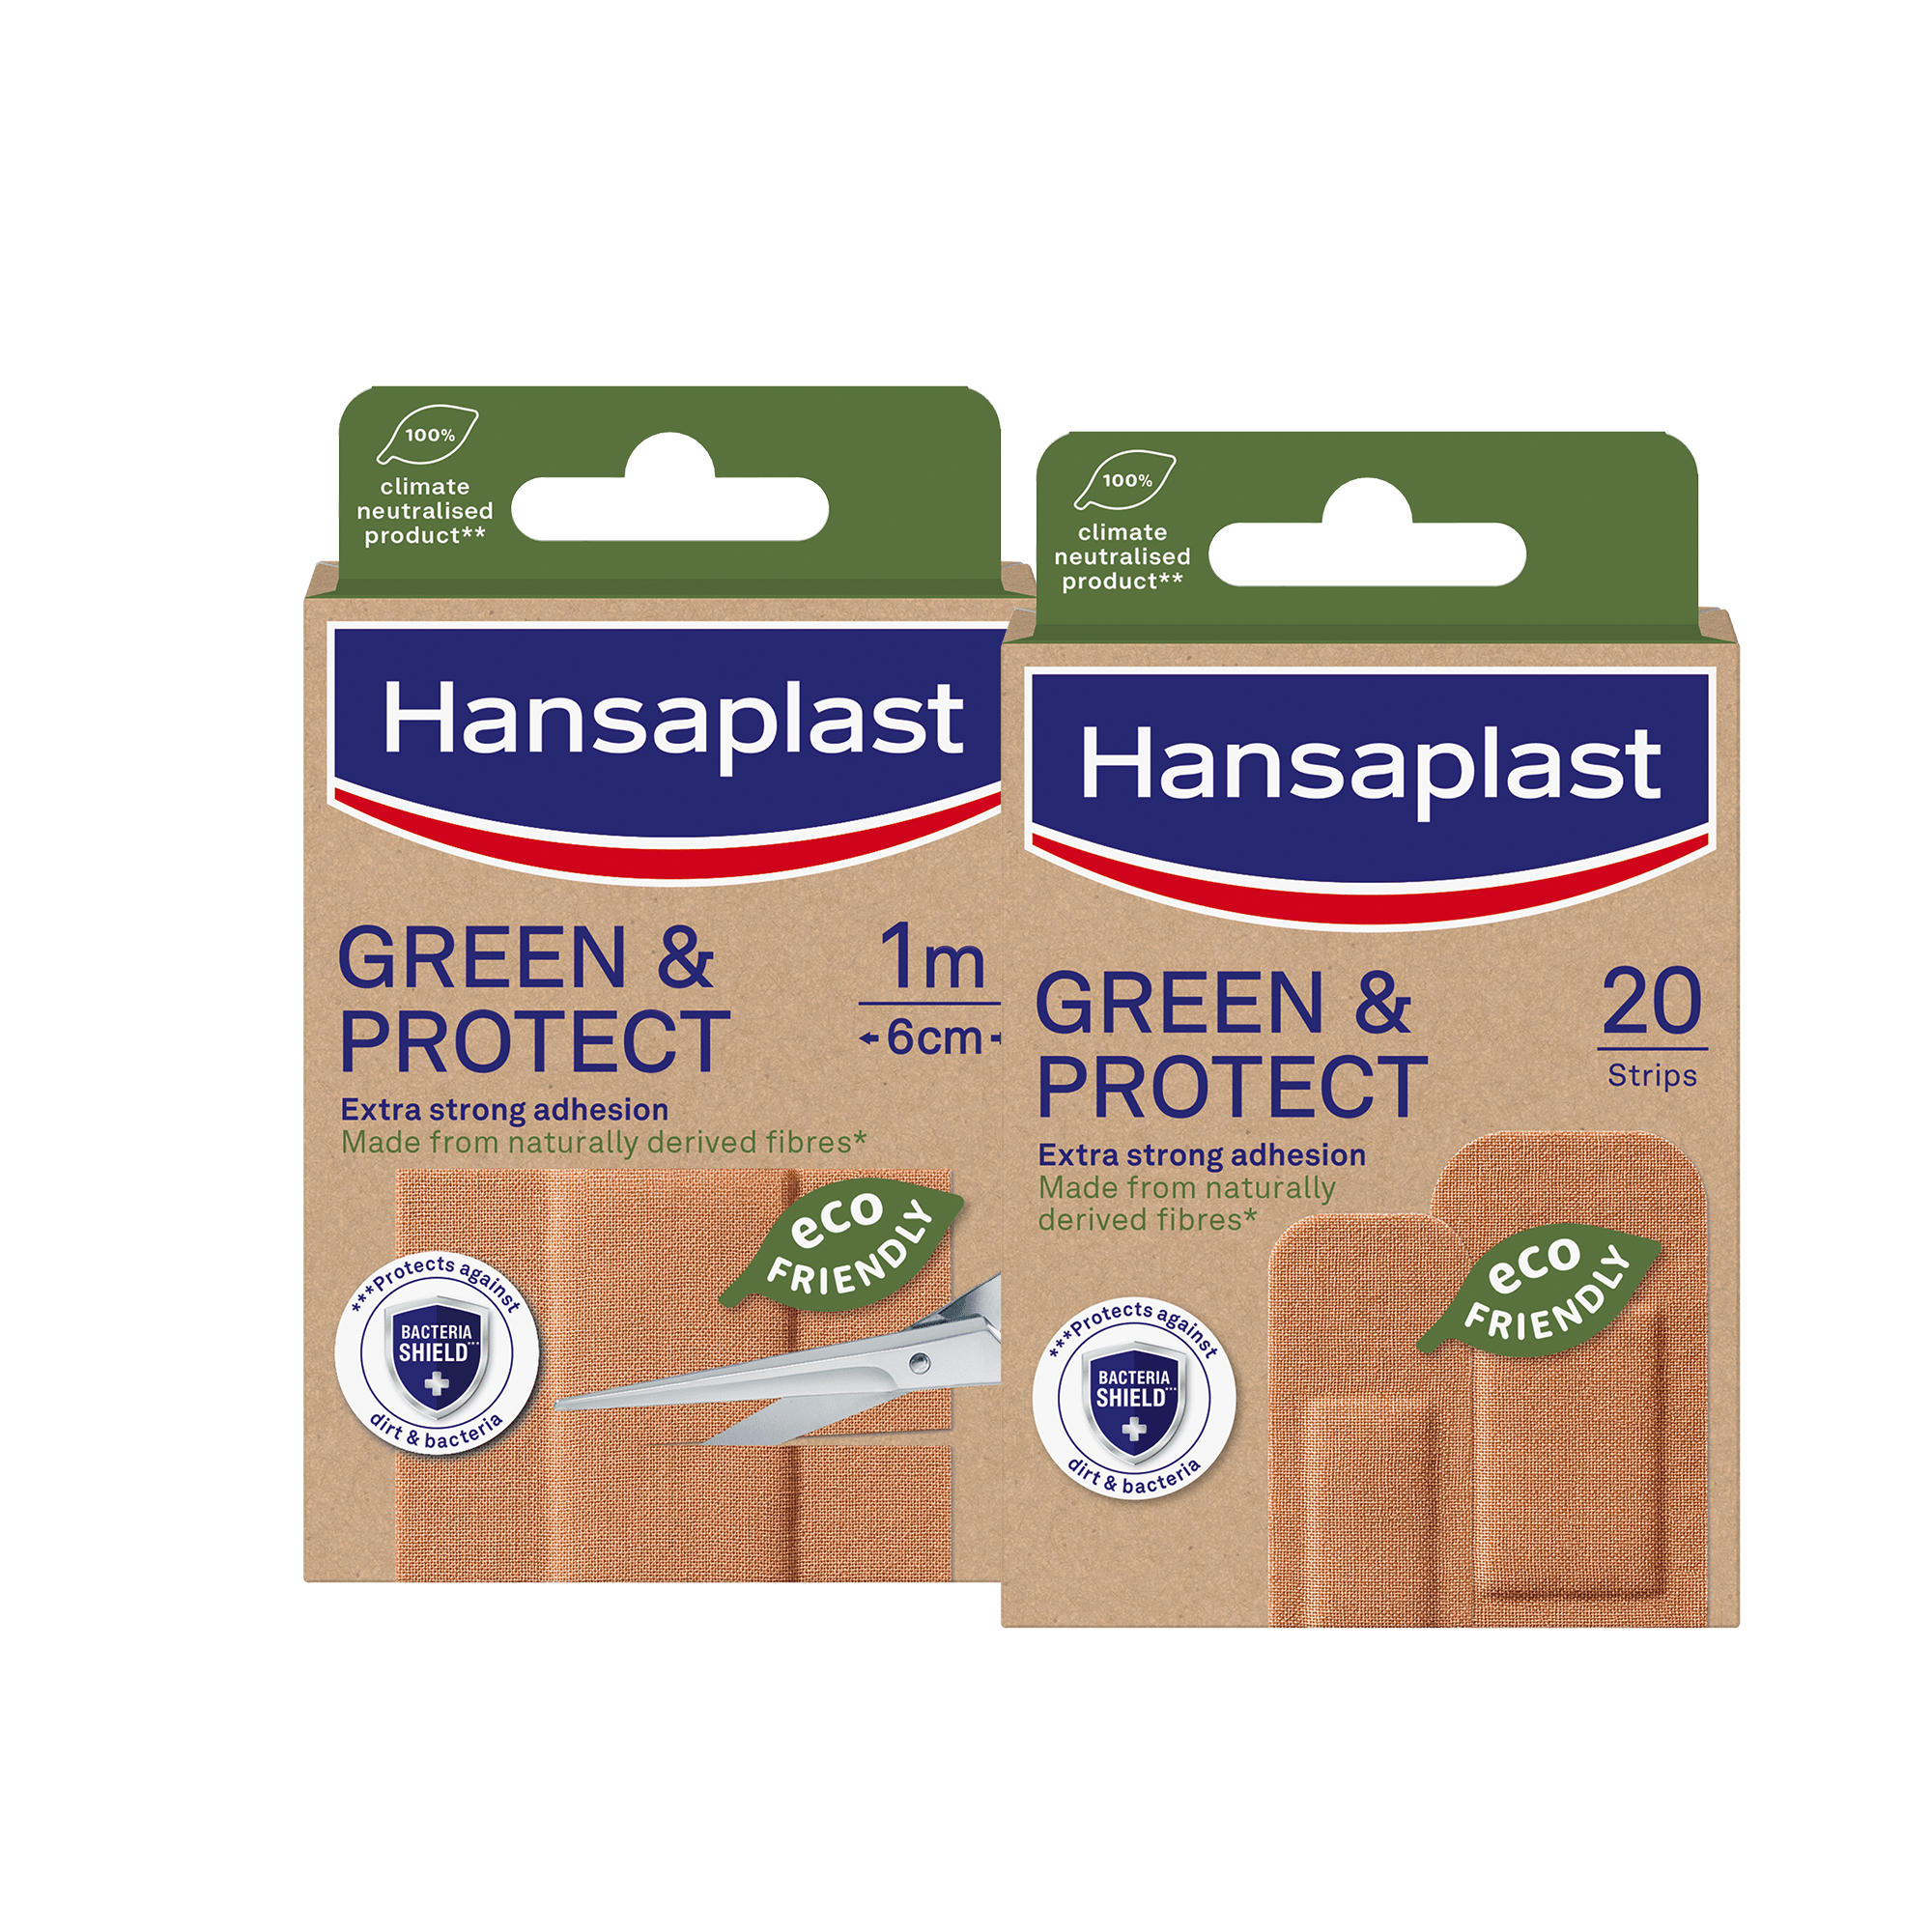 Hansaplast green and protect flasteri